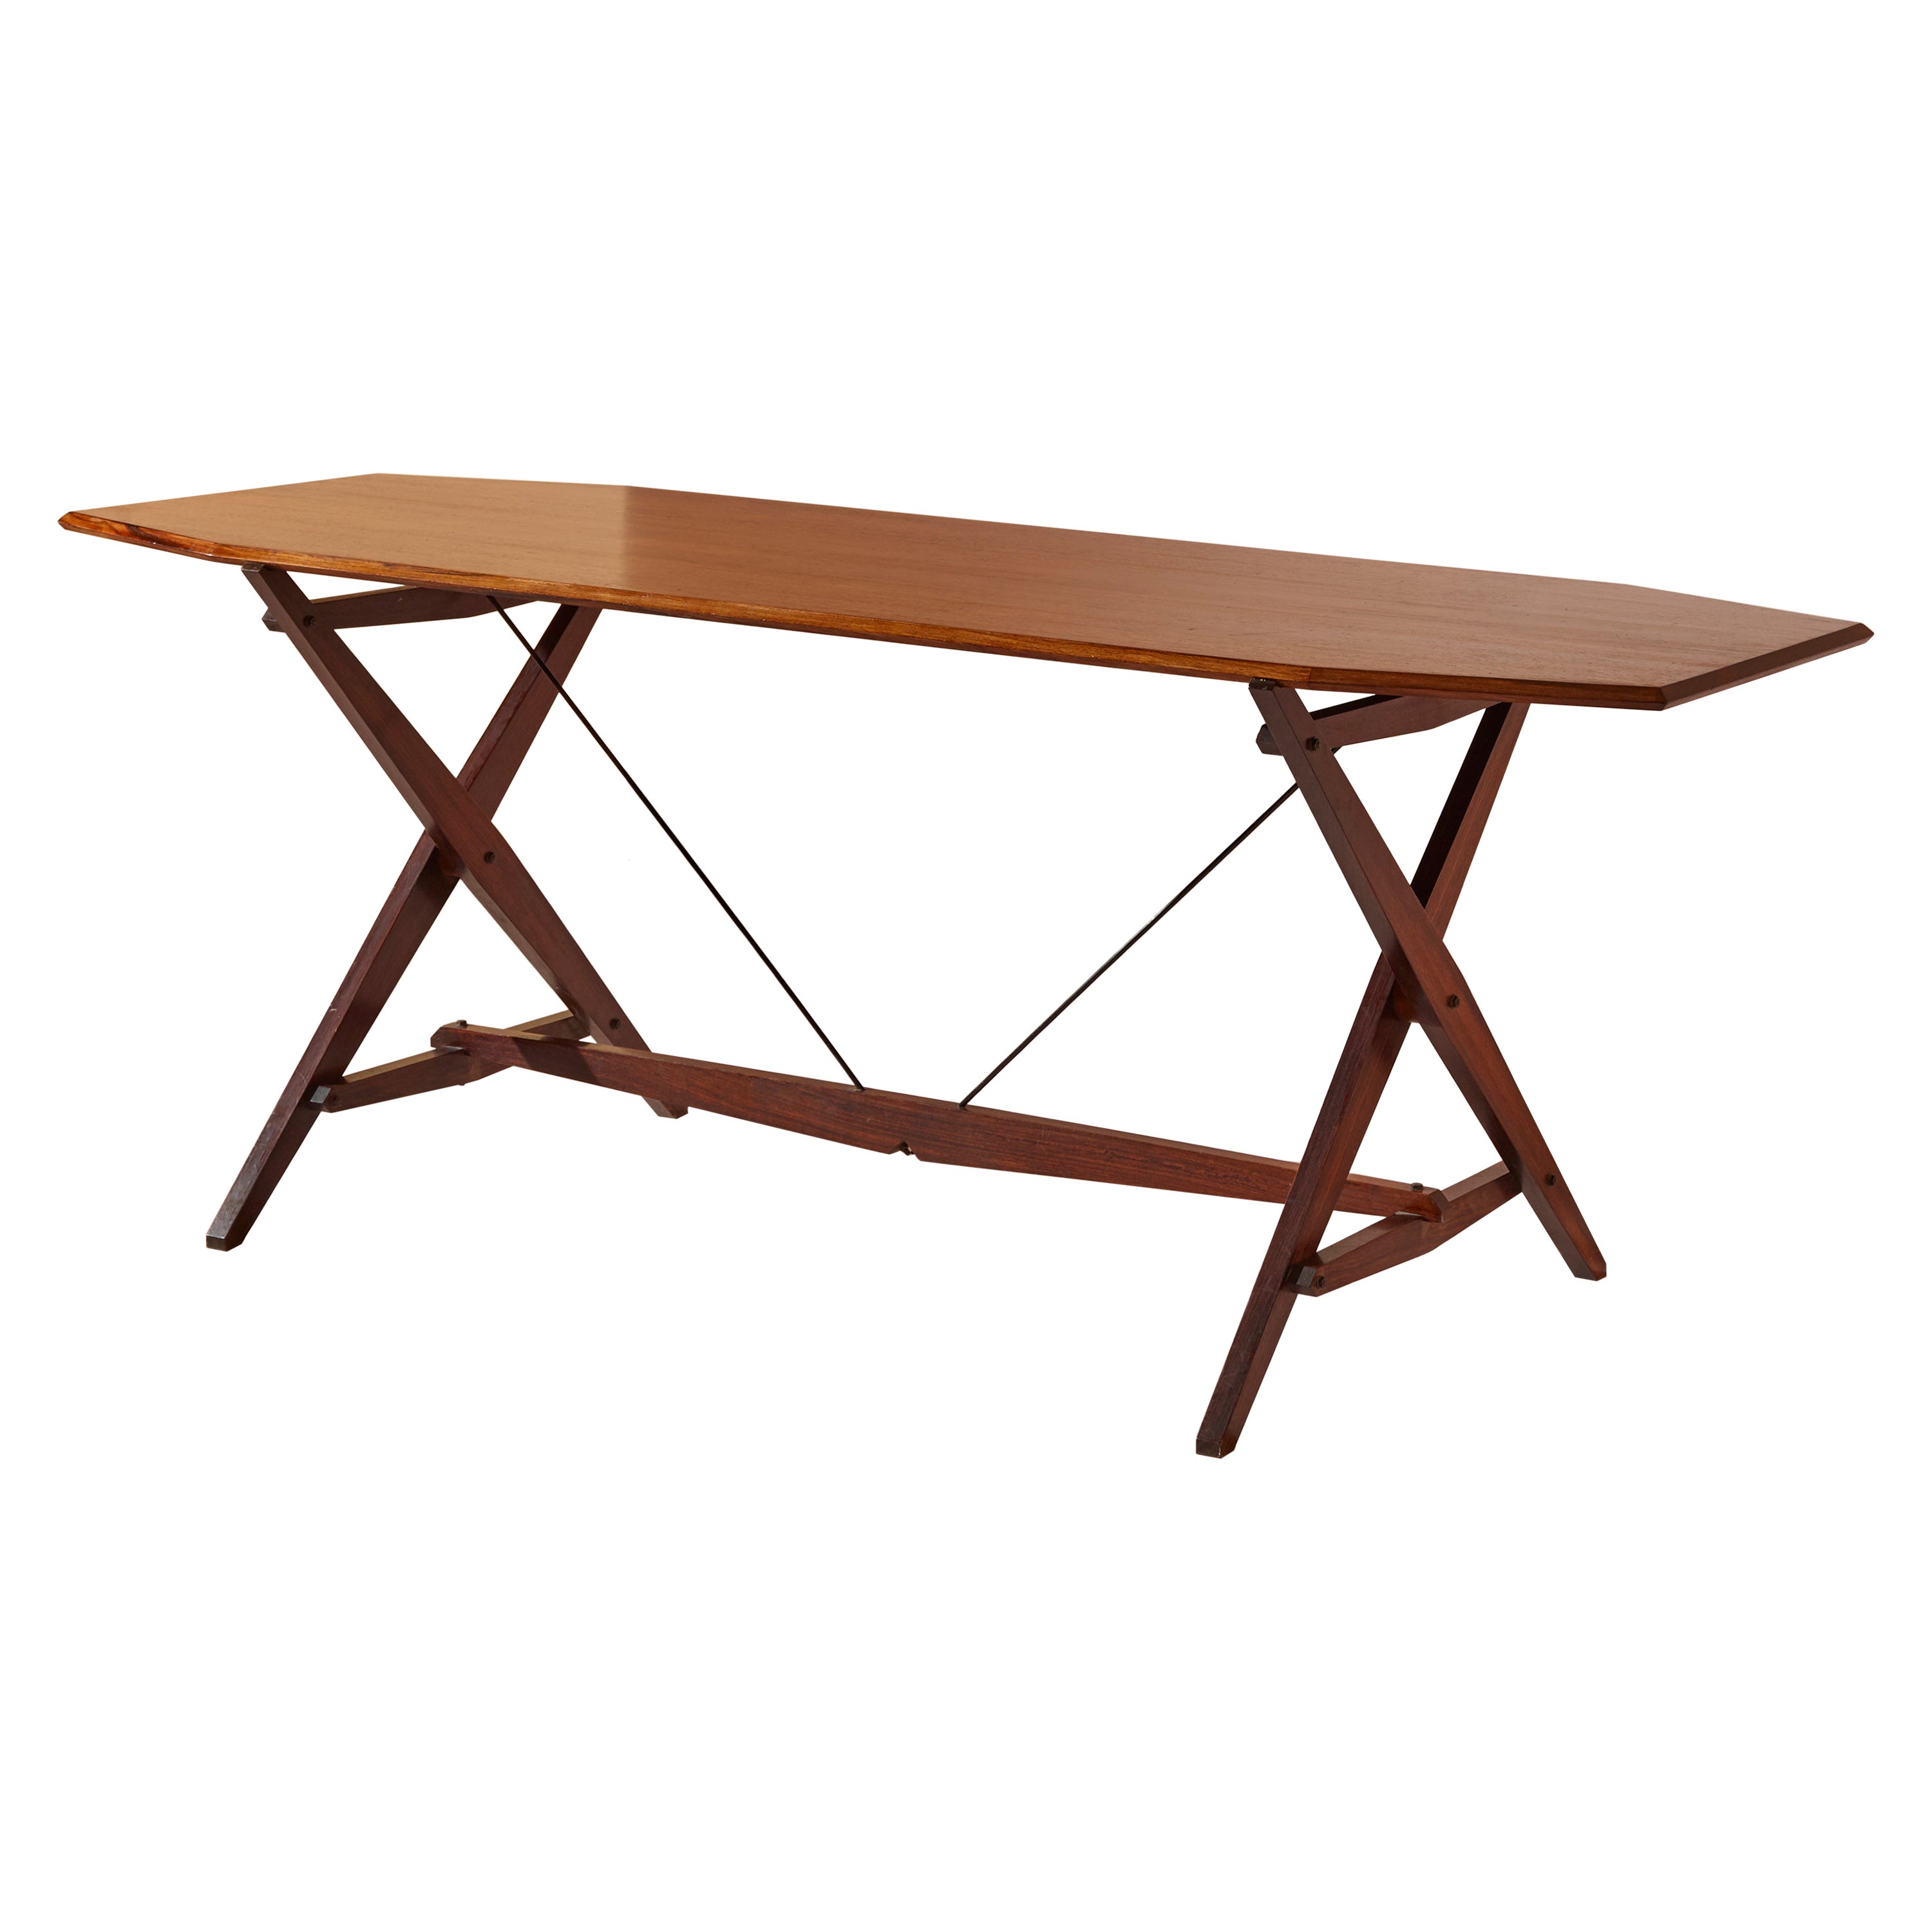 Franco Albini teak dining Table Model TL2 'Cavalletto' for Poggi, Italy 1950s For Sale